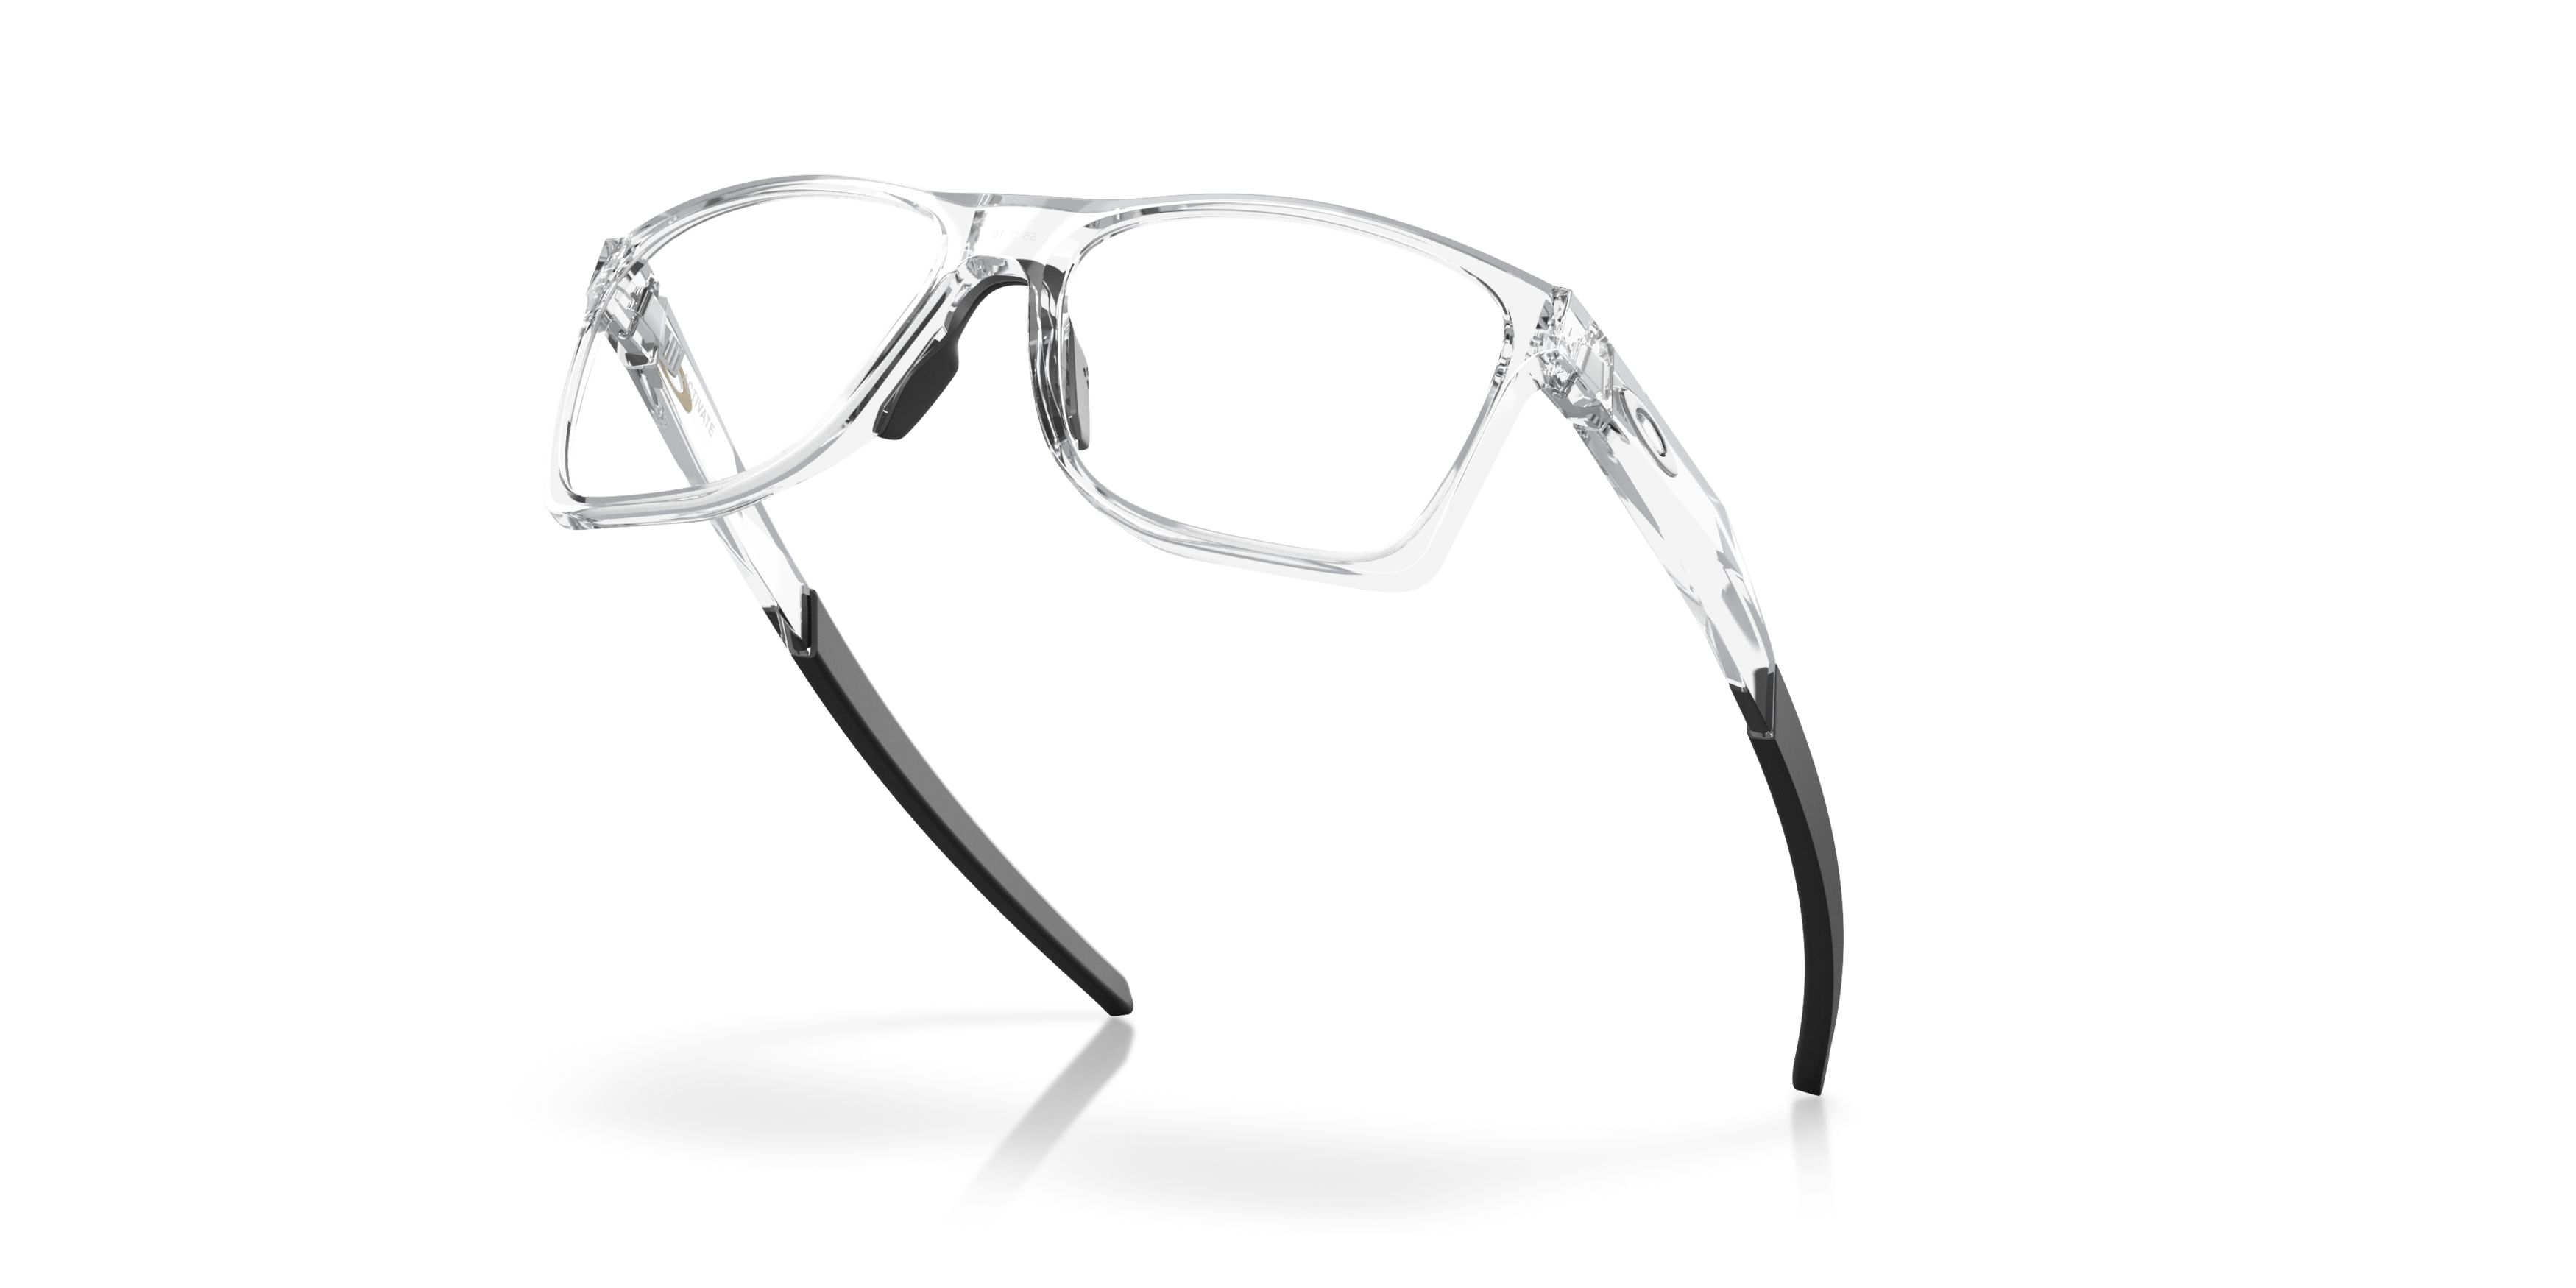 Bottom_Up Oakley Activate OX 8173 Glasses Transparent / transparent, clear